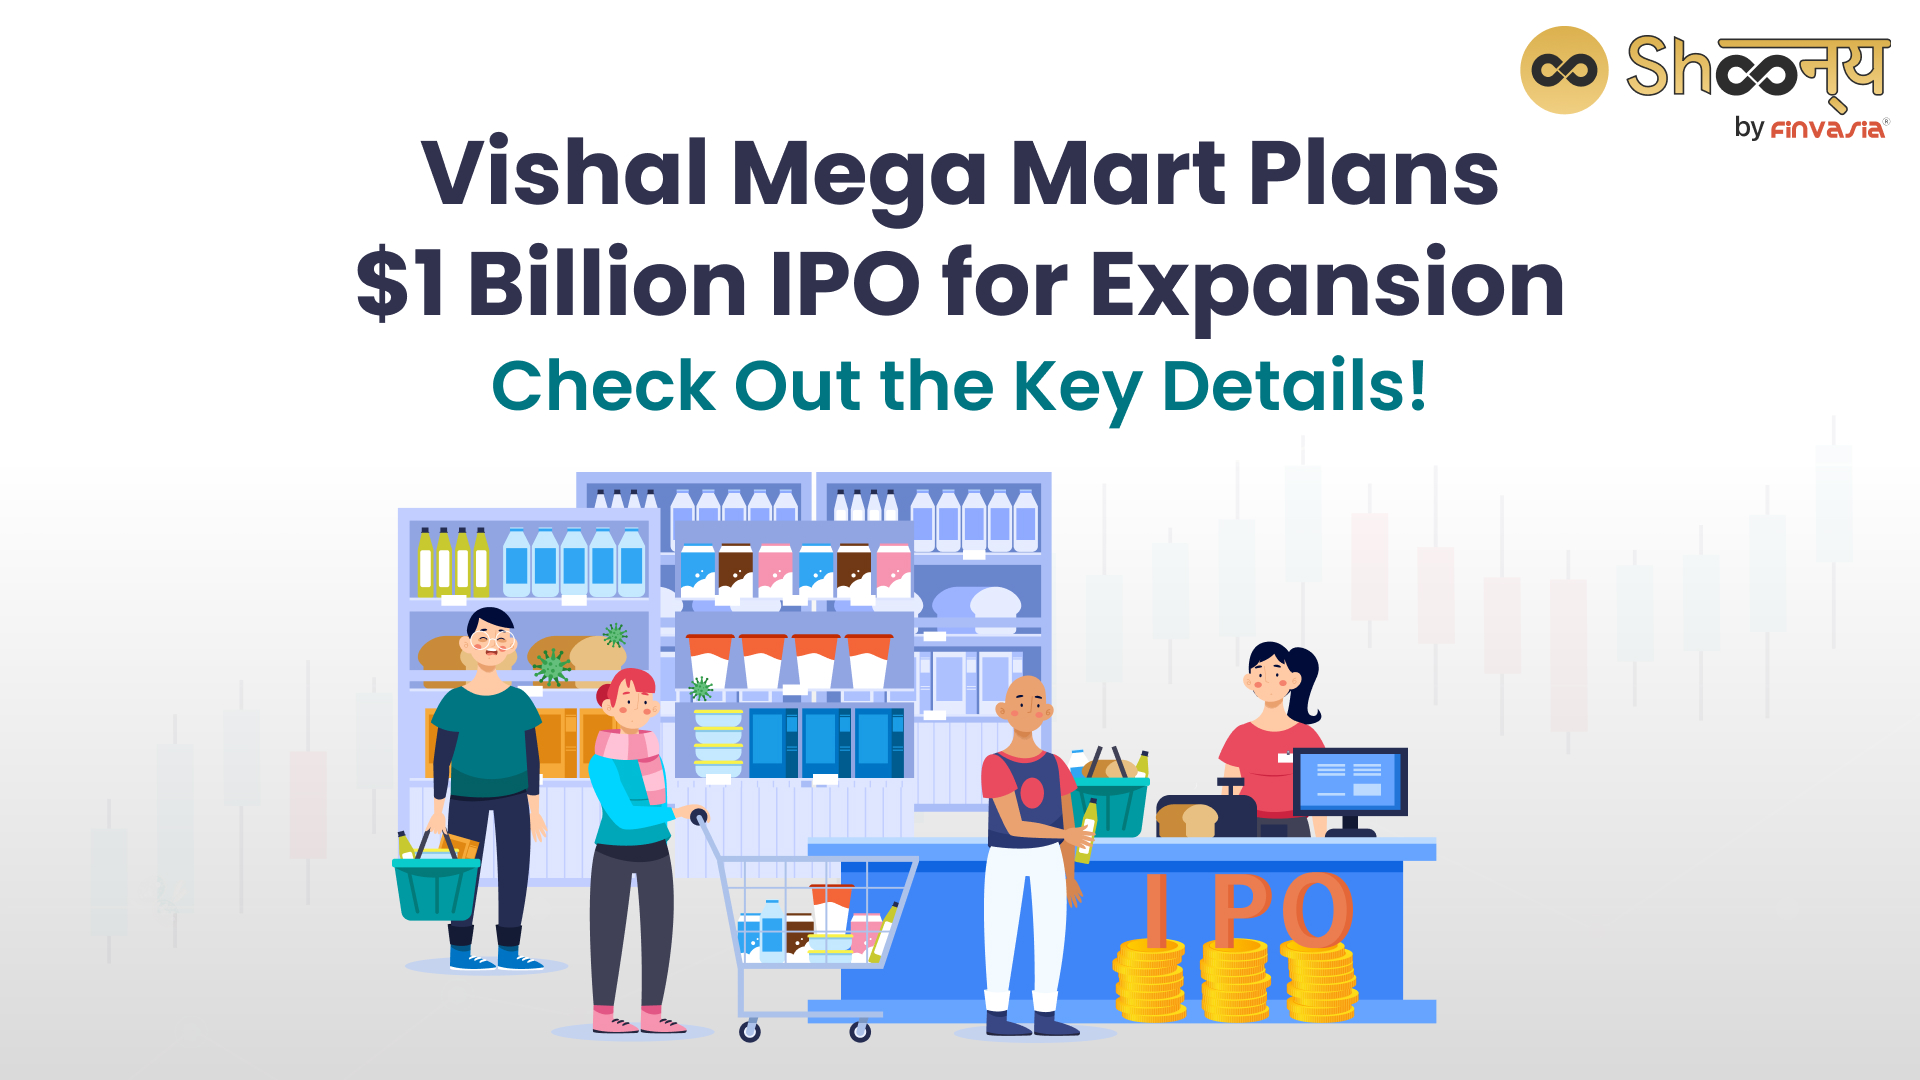 Exclusive Insights into Vishal Mega Mart's $1 Billion IPO Plan